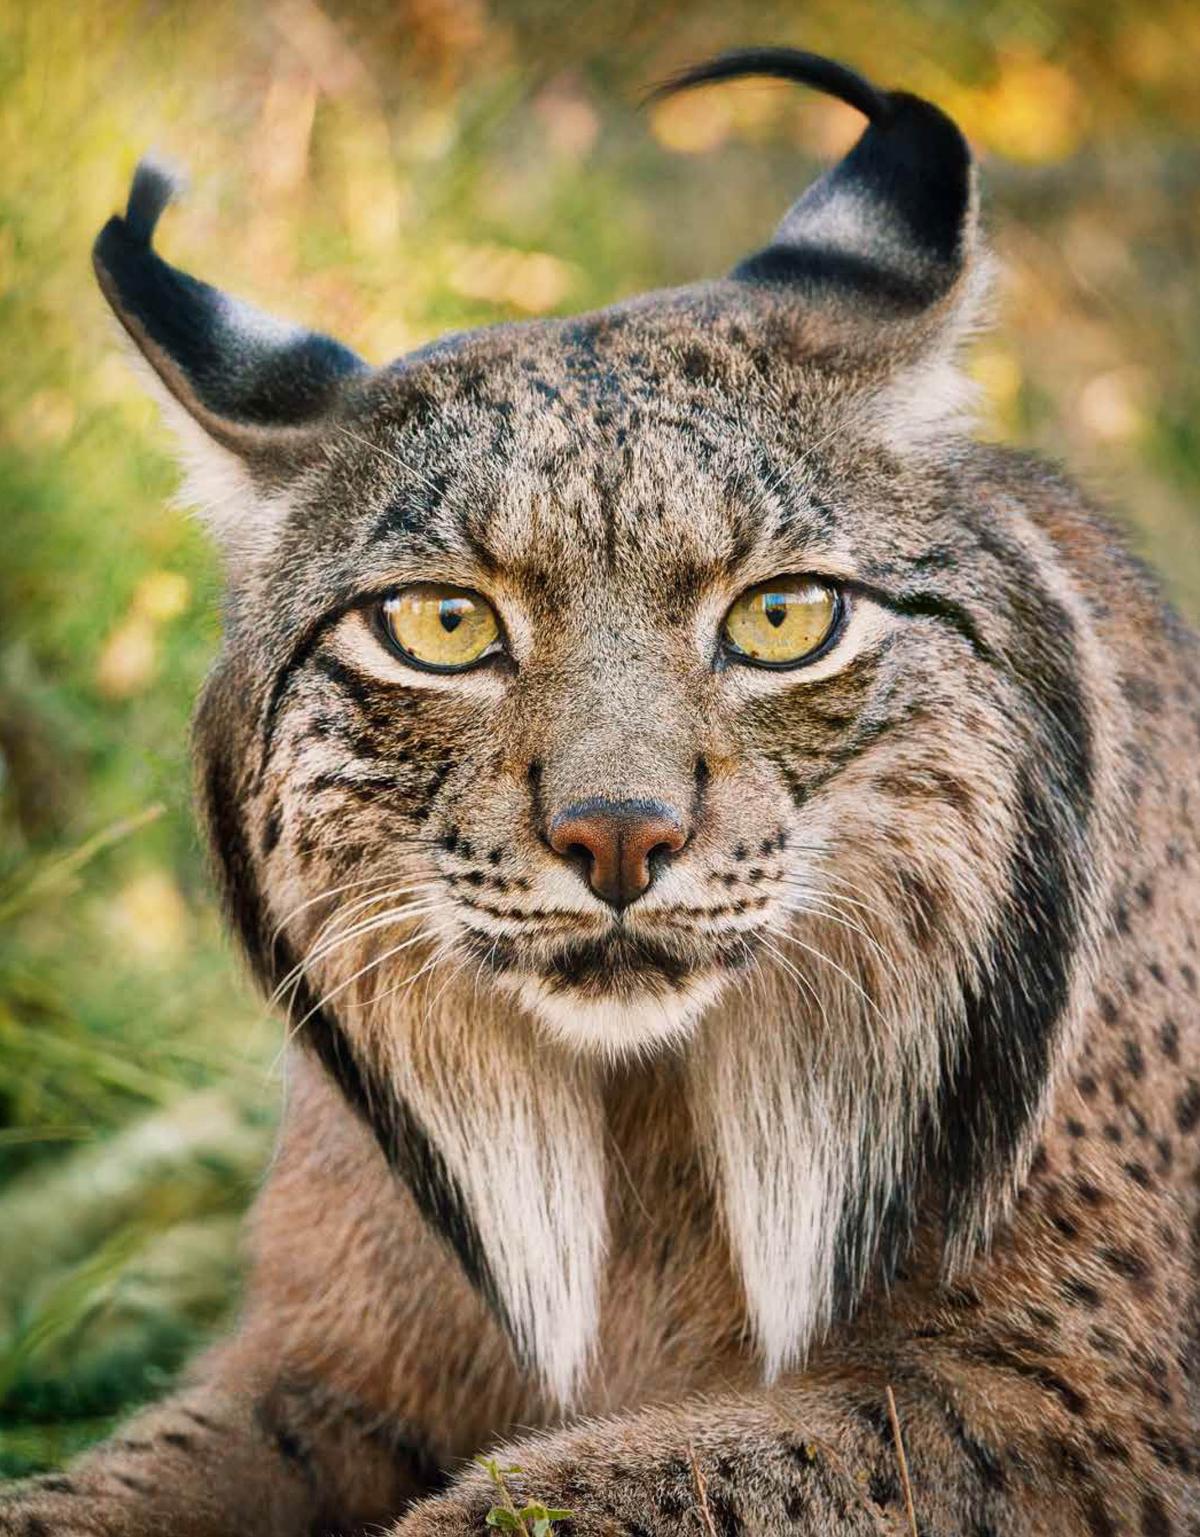 An Iberian lynx. (Courtesy of <a href="https://timflach.com/">Tim Flach</a>)